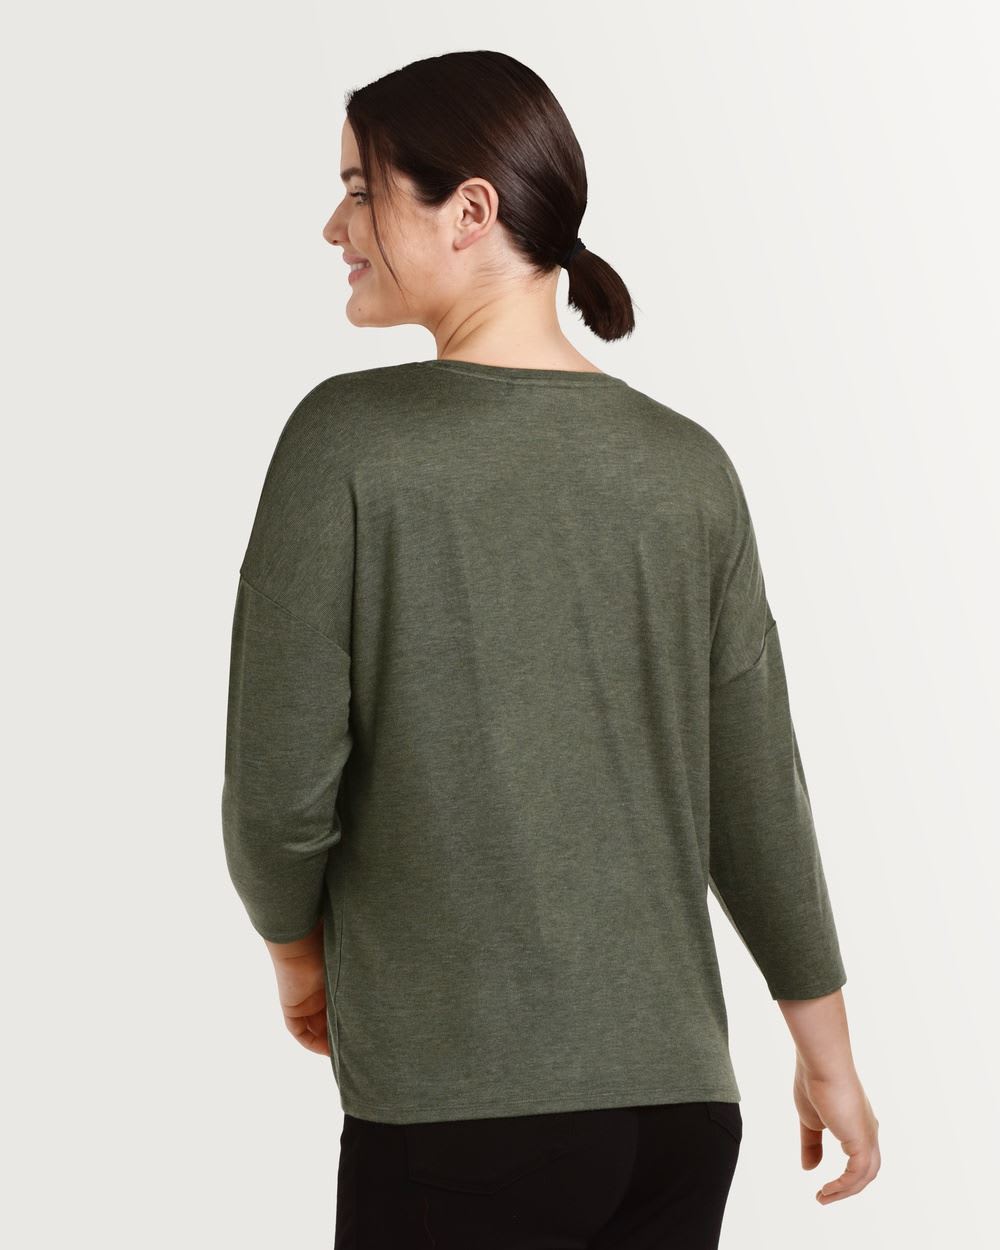 ¾ Sleeve V-Neck Pullover